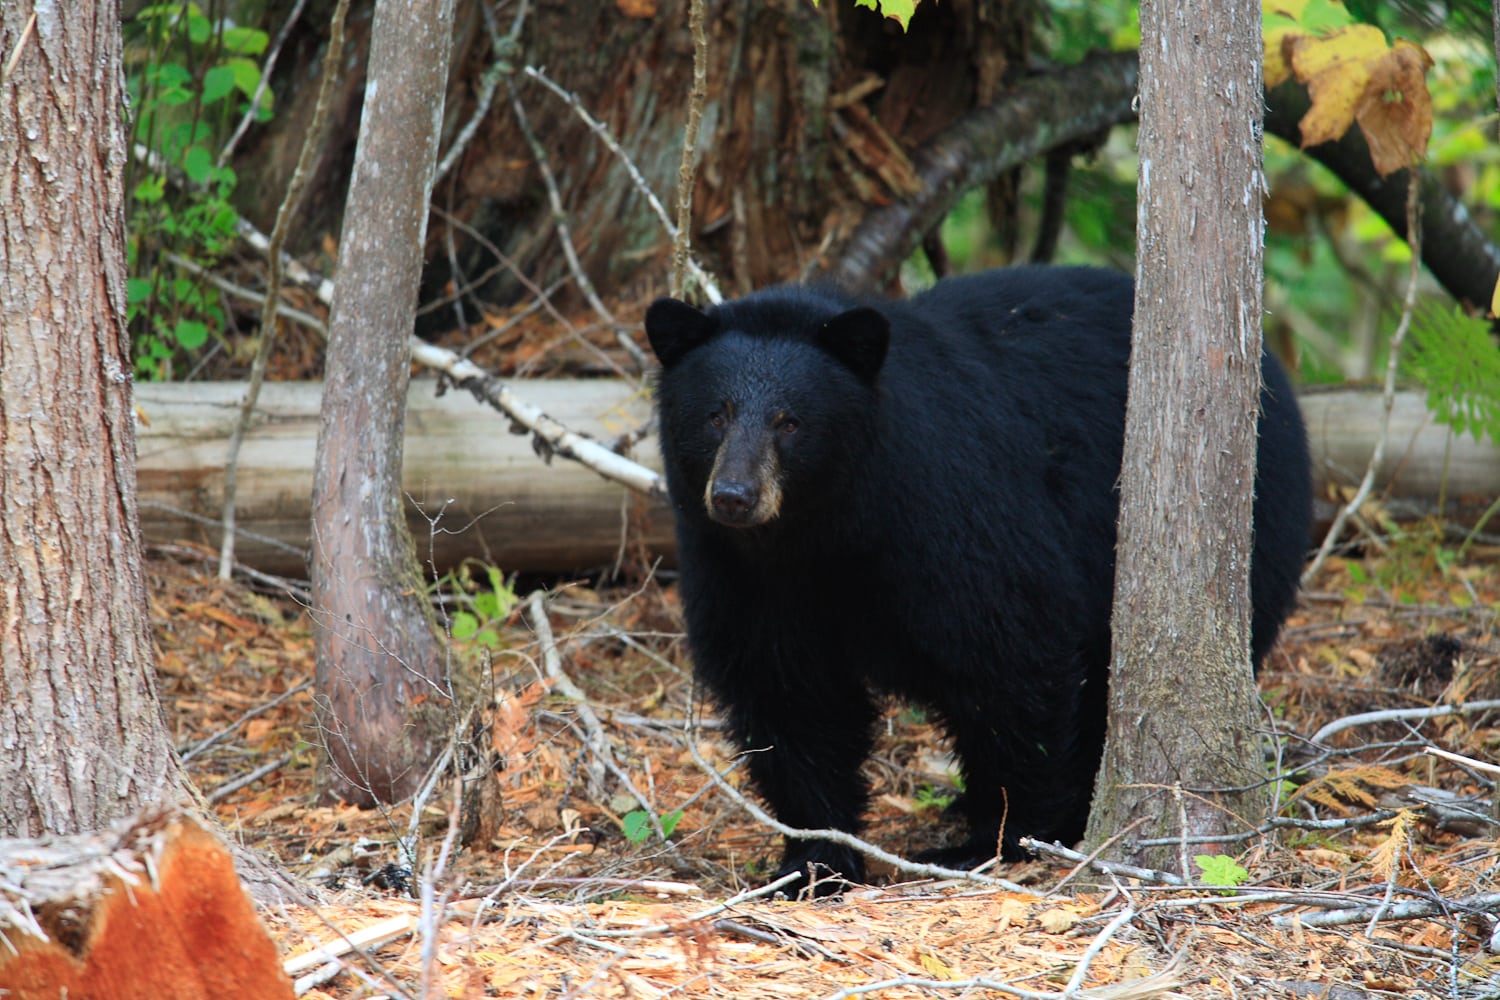 Bear-watching. A large black bear at Wild Bear Lodge.